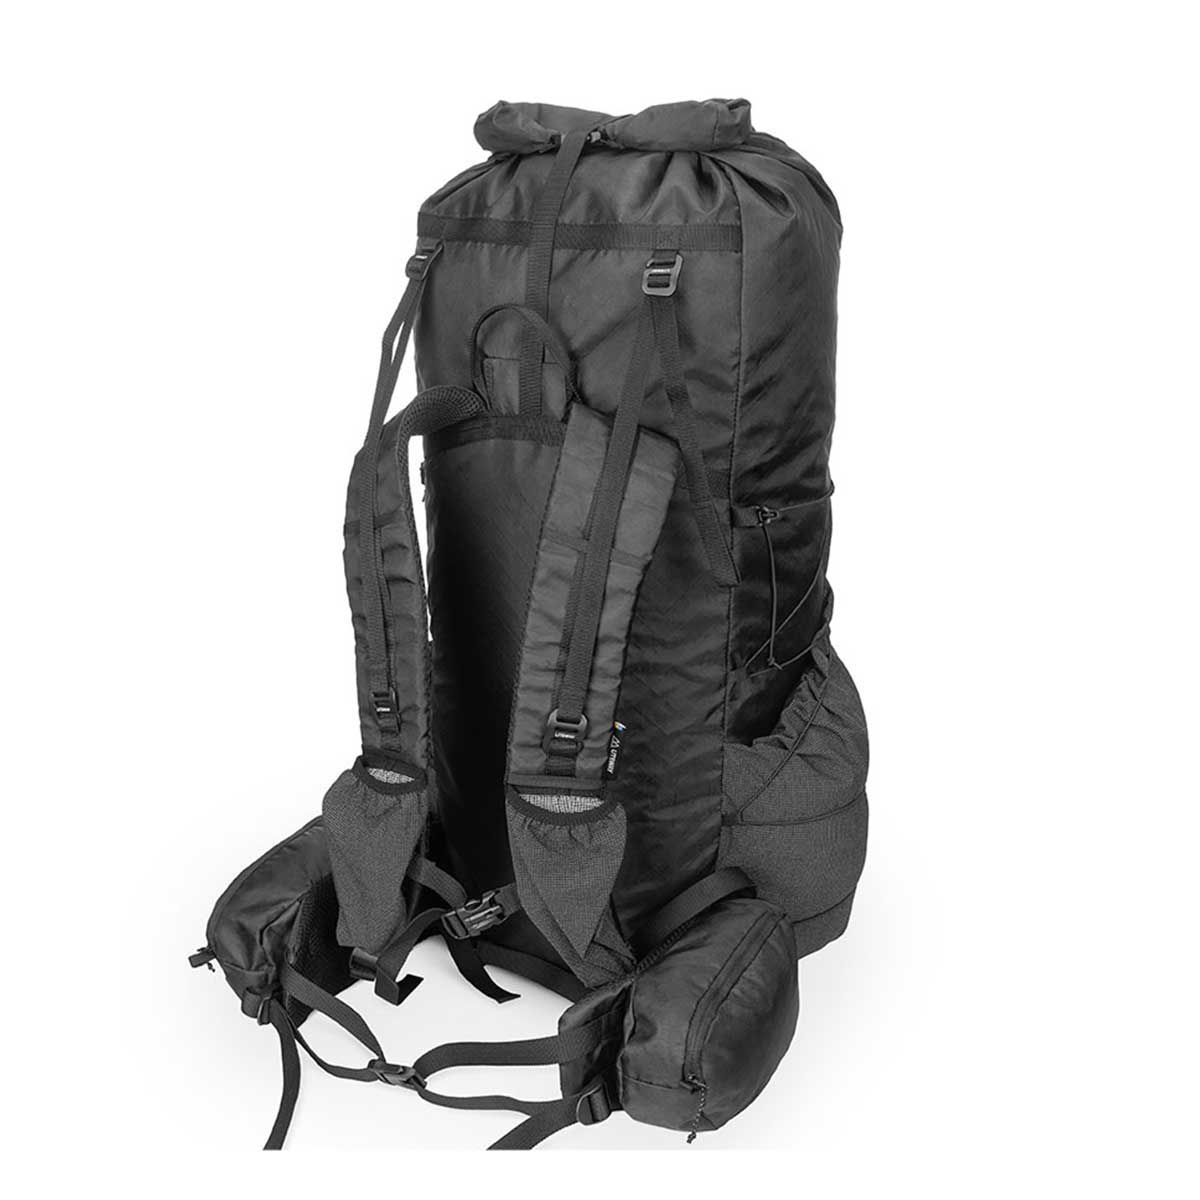 Liteway Elementum backpacking backpack - 50L